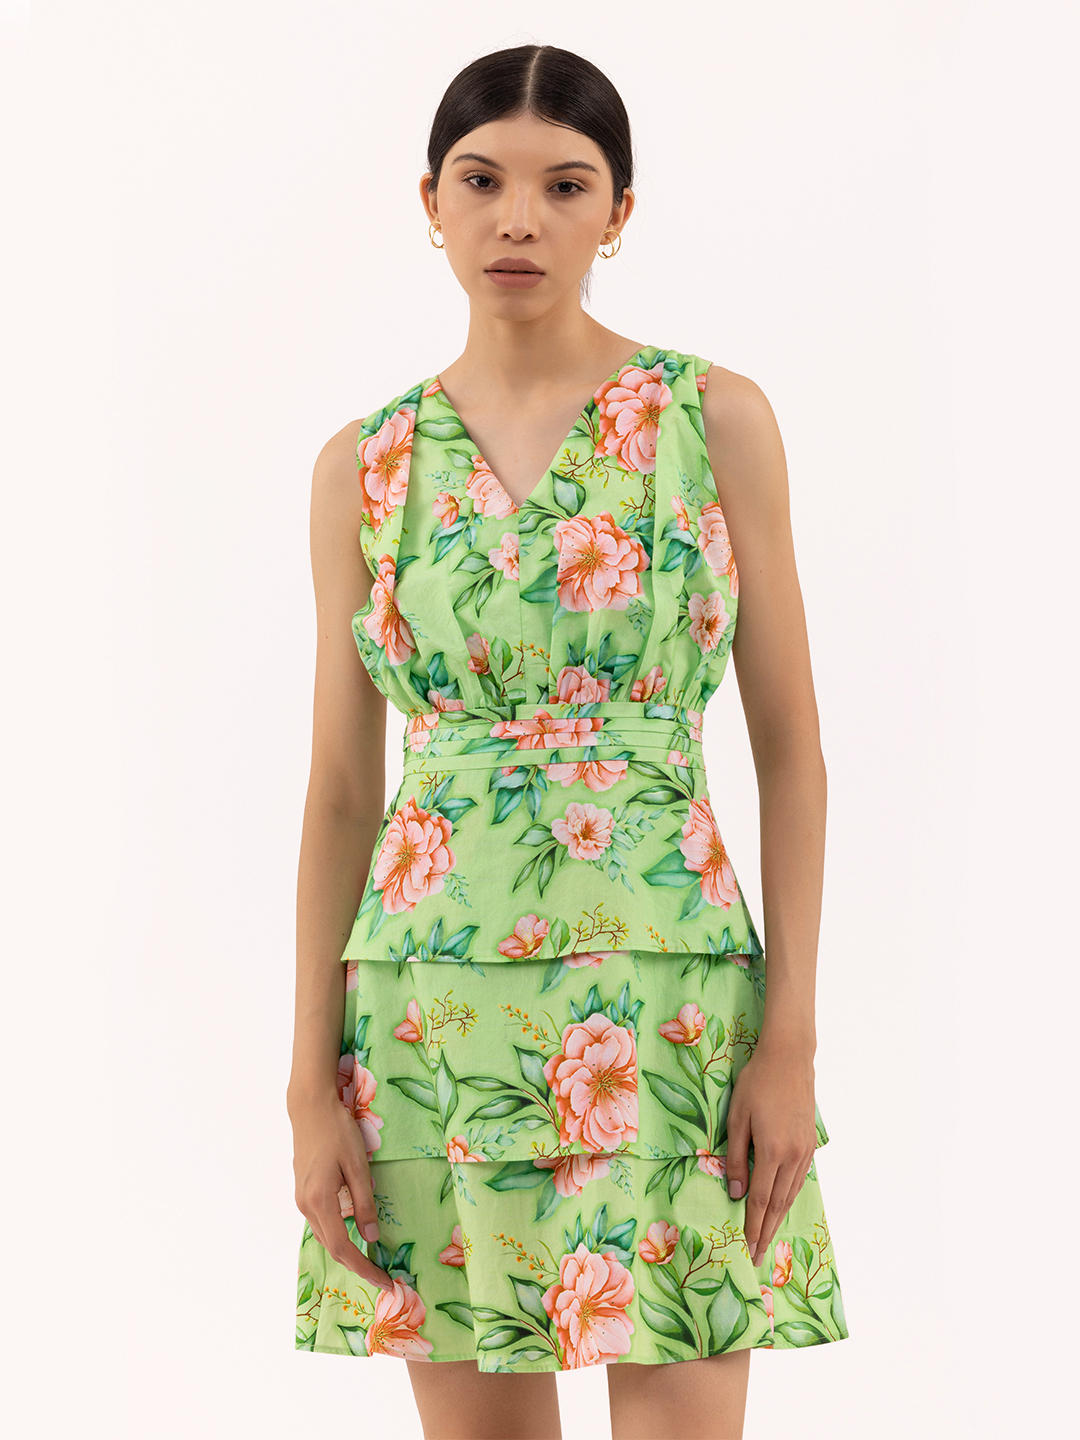 Garden Explorer Bright  Floral Print Dress - Main